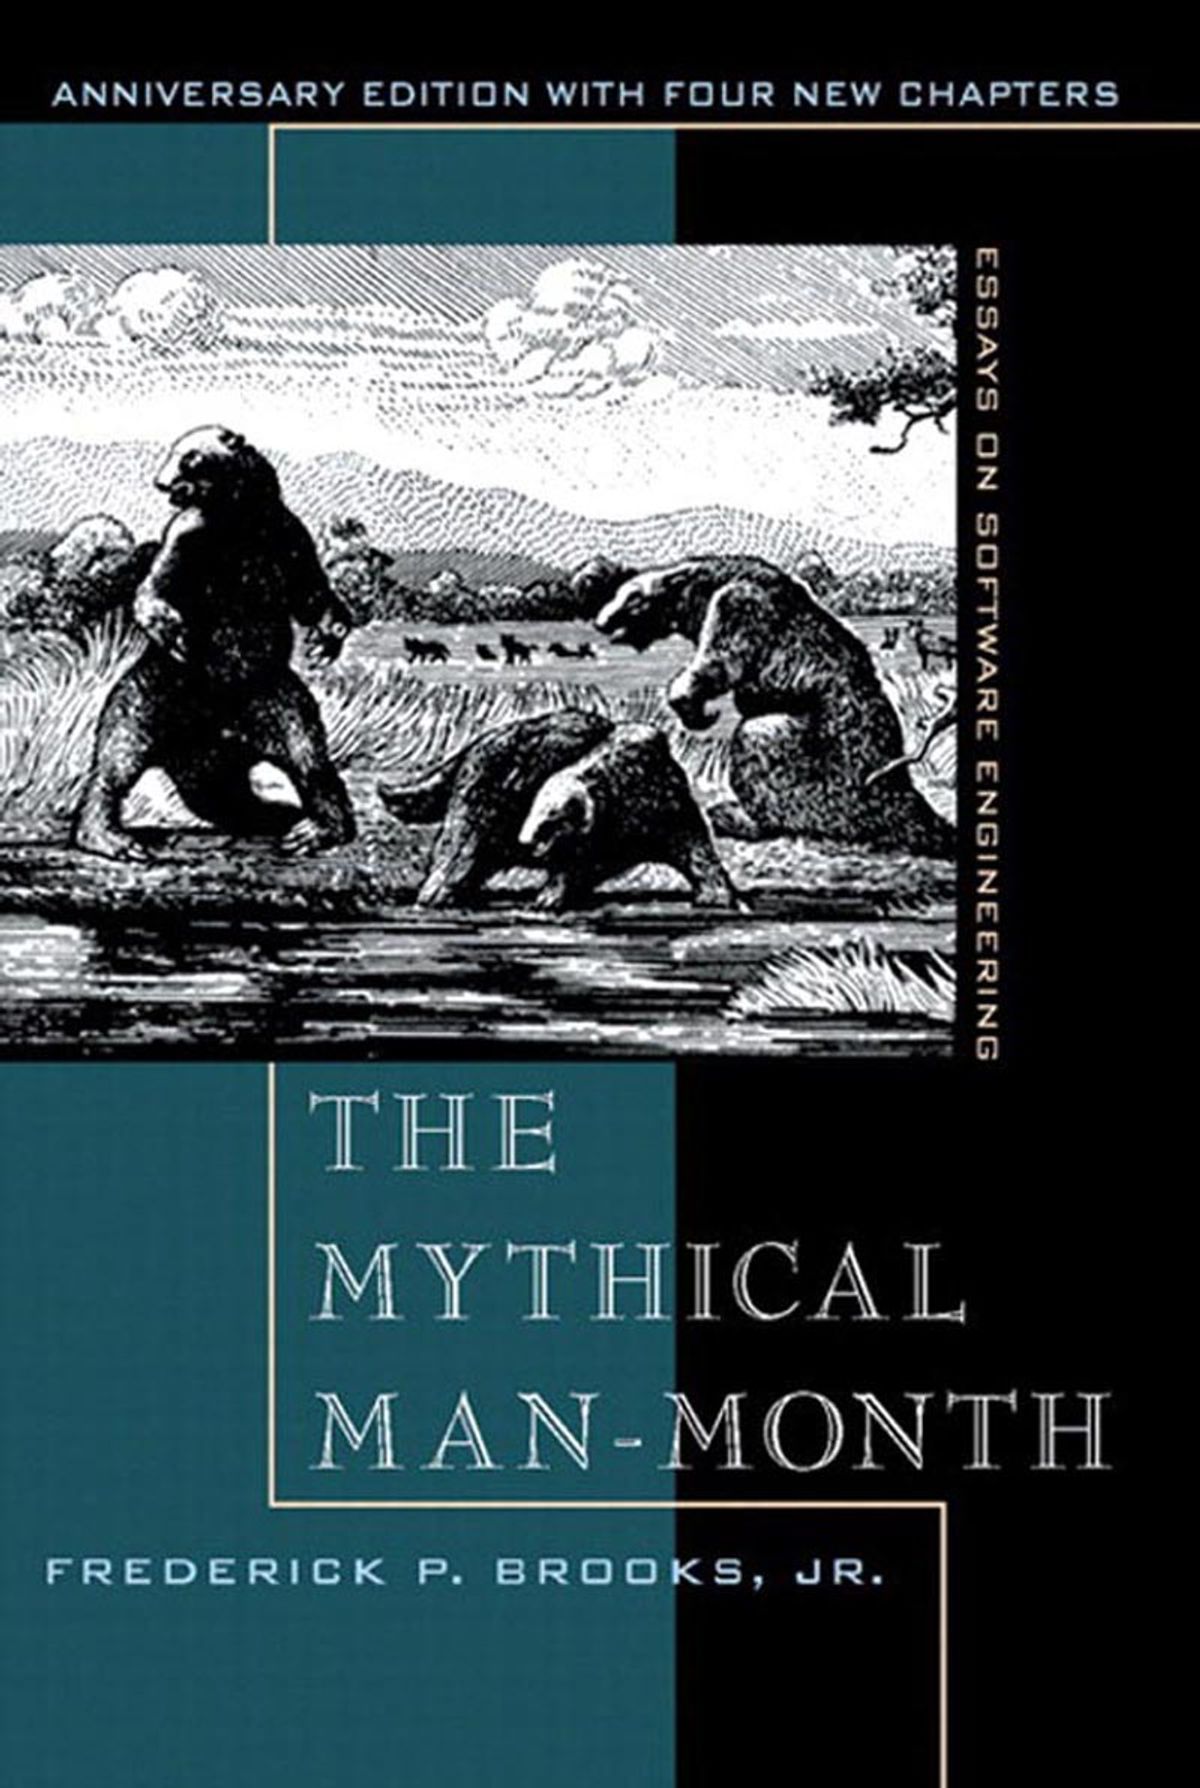 Man month. Brooks 1995 книга. Мифический человеко-месяц книга. Mythical man month. The Mythical man-month – Frederick p. Brooks Jr..